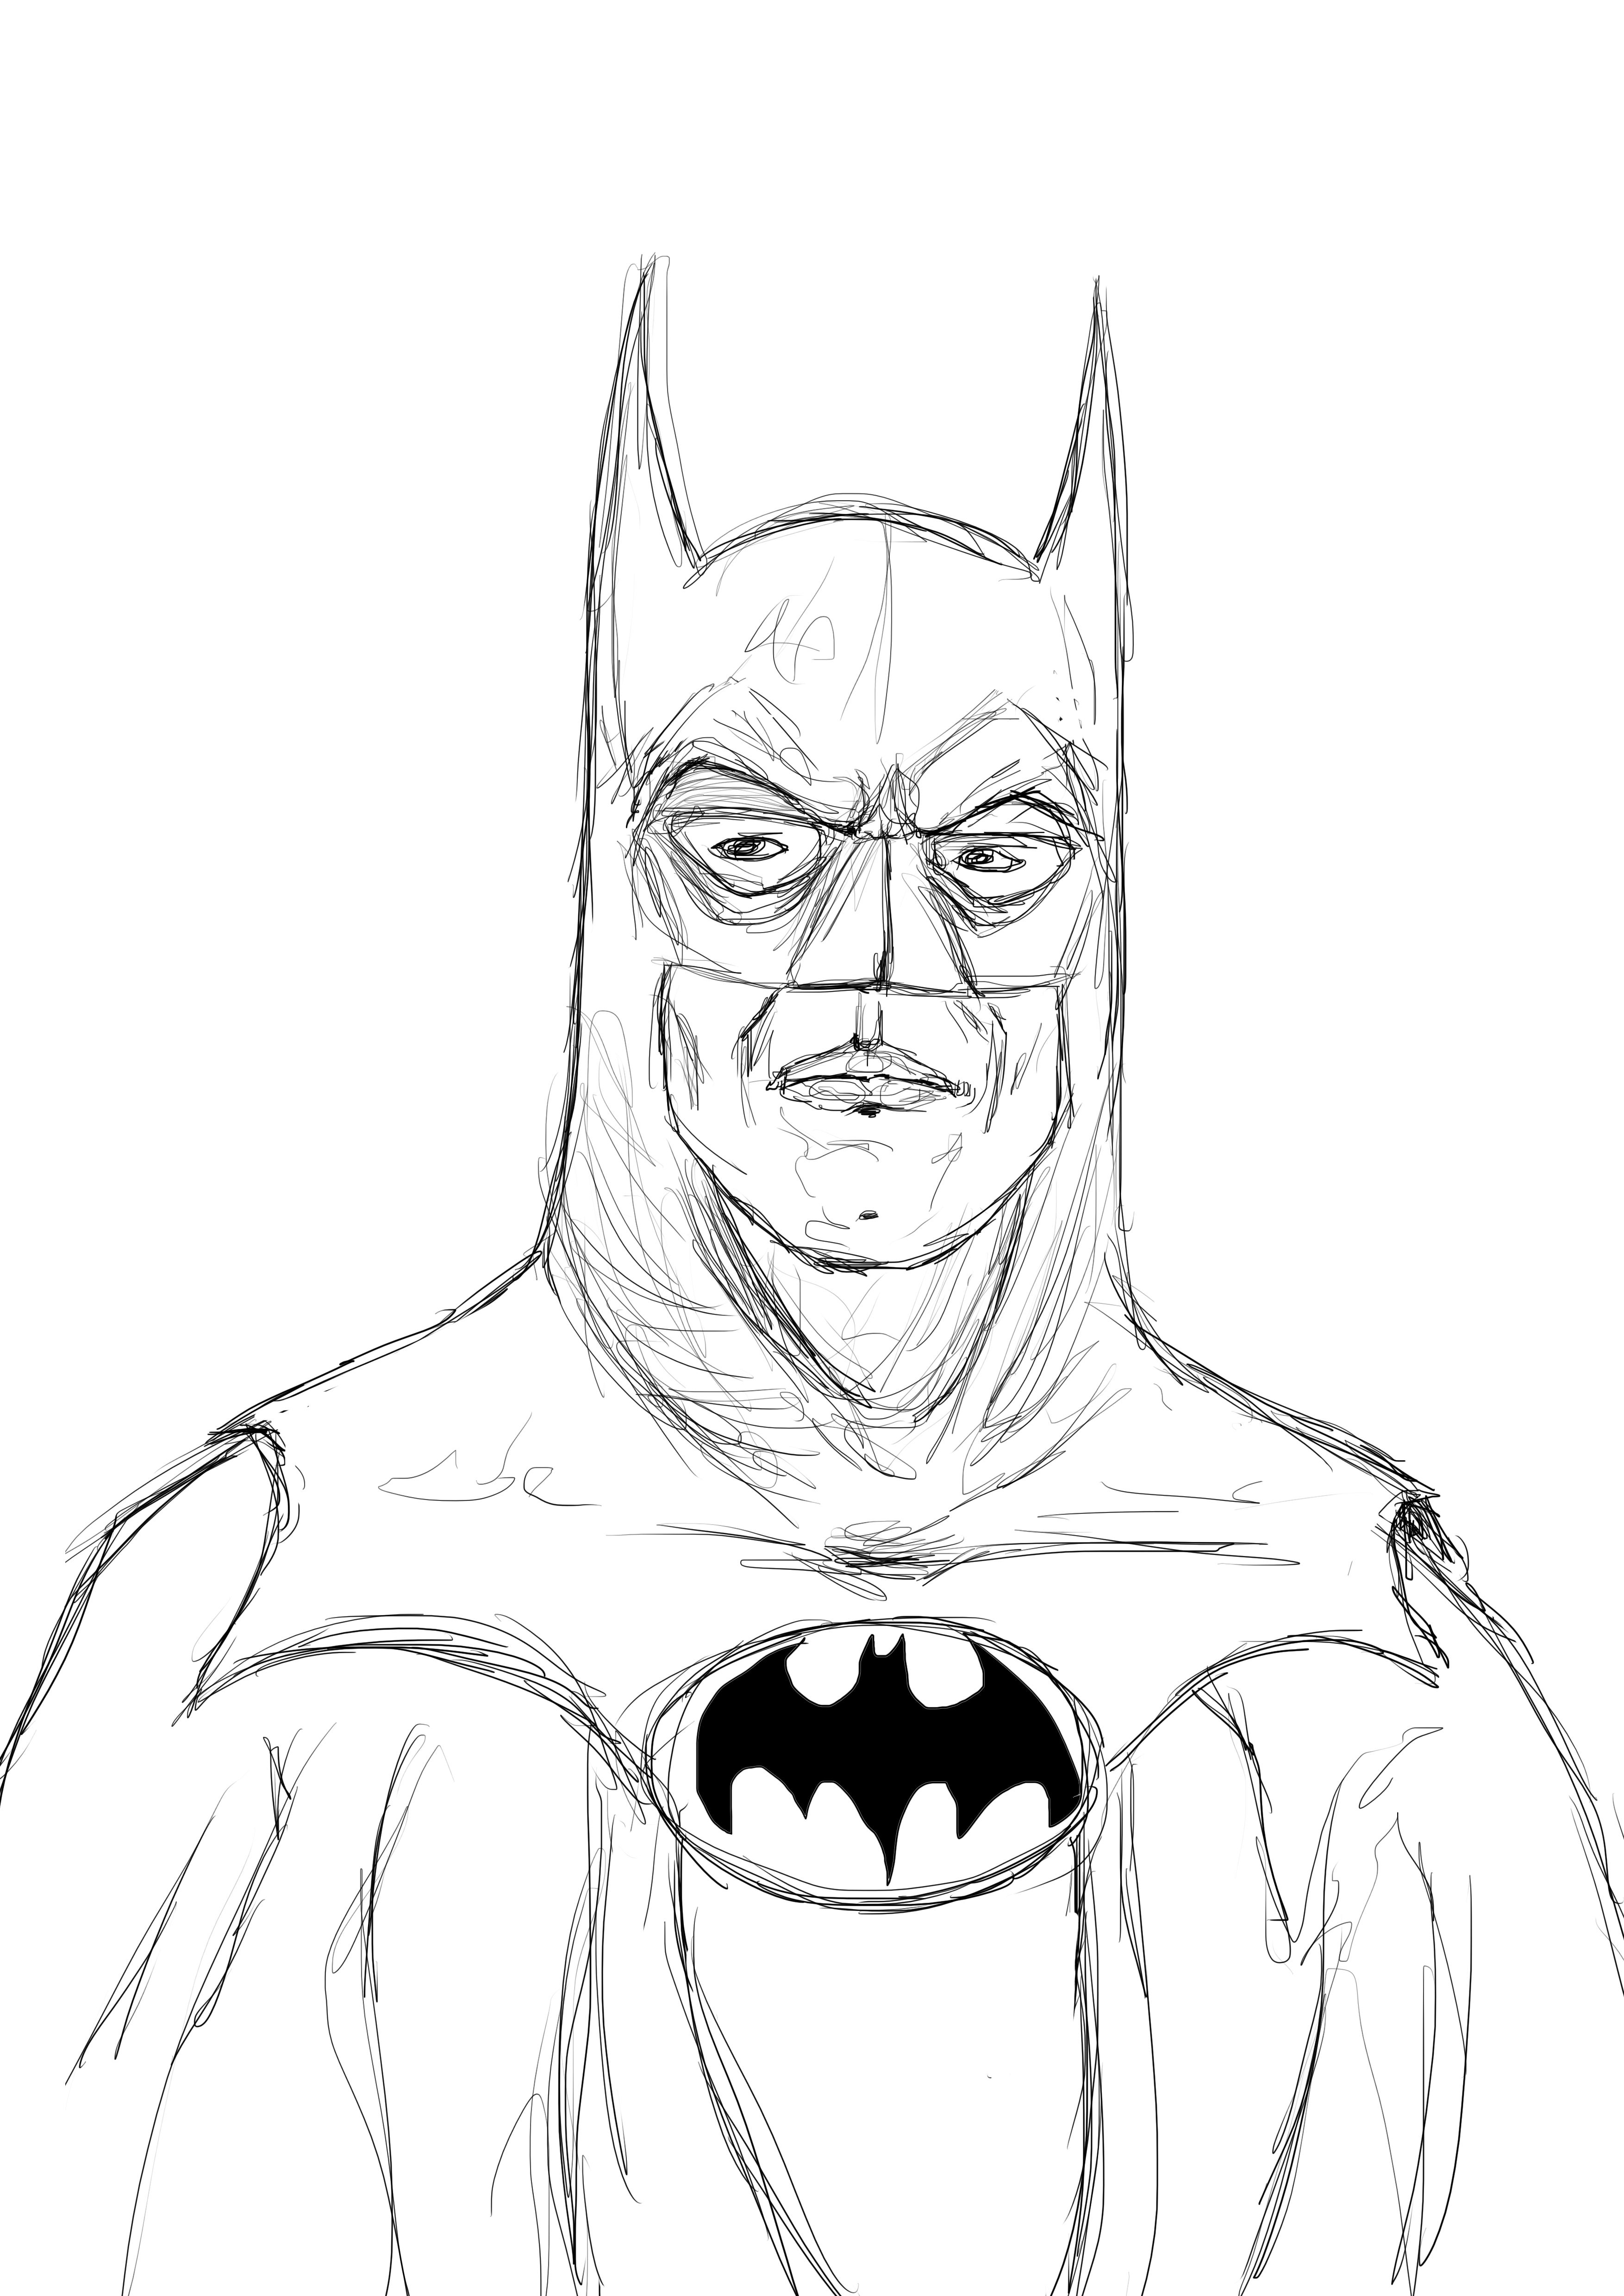 how to draw Batman | Batman half face step by step | easy tutorial - YouTube